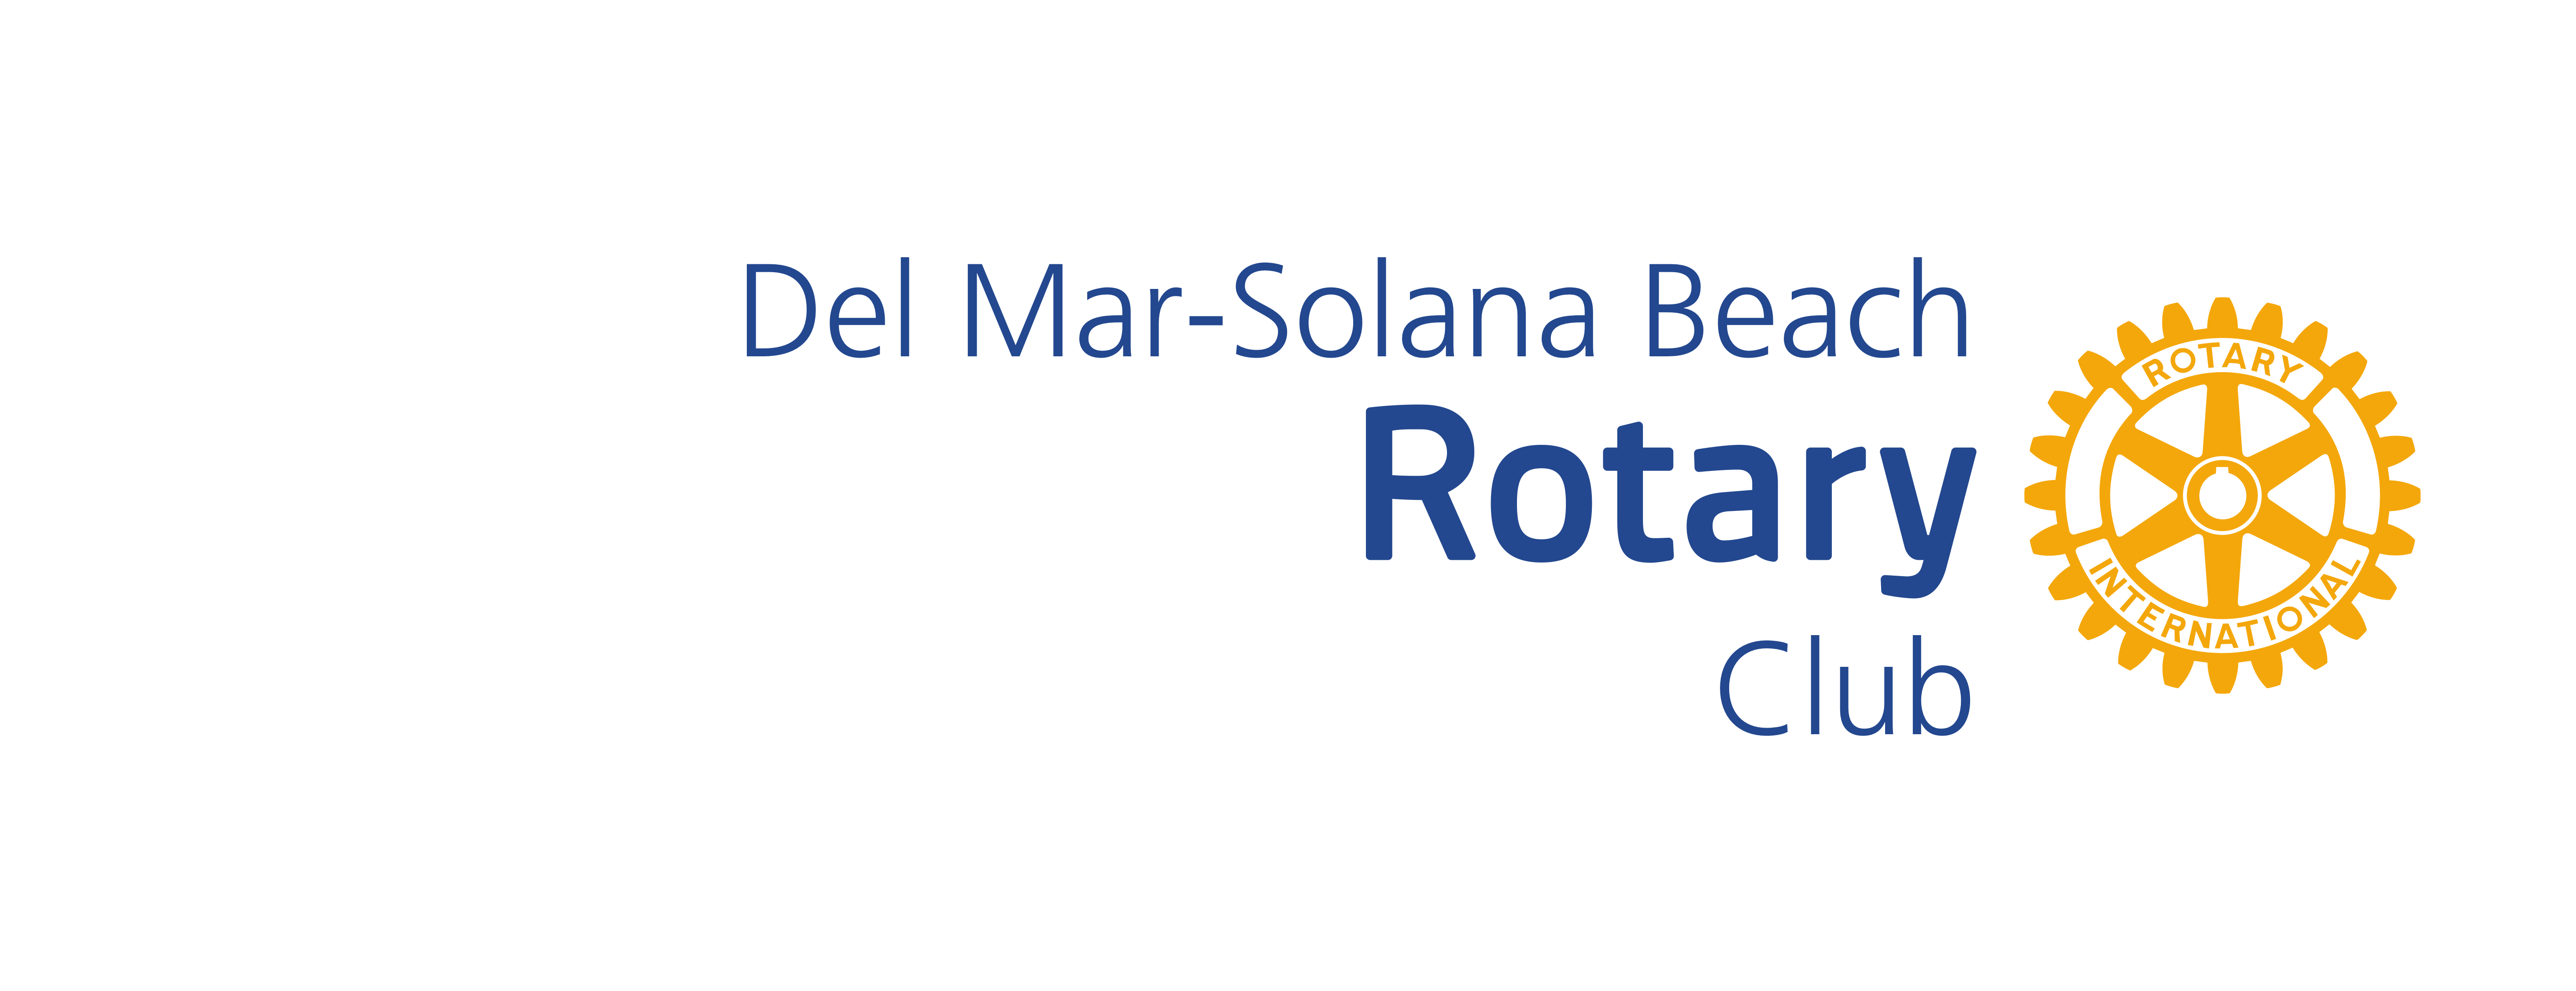 Del Mar Solana Beach Rotary Club